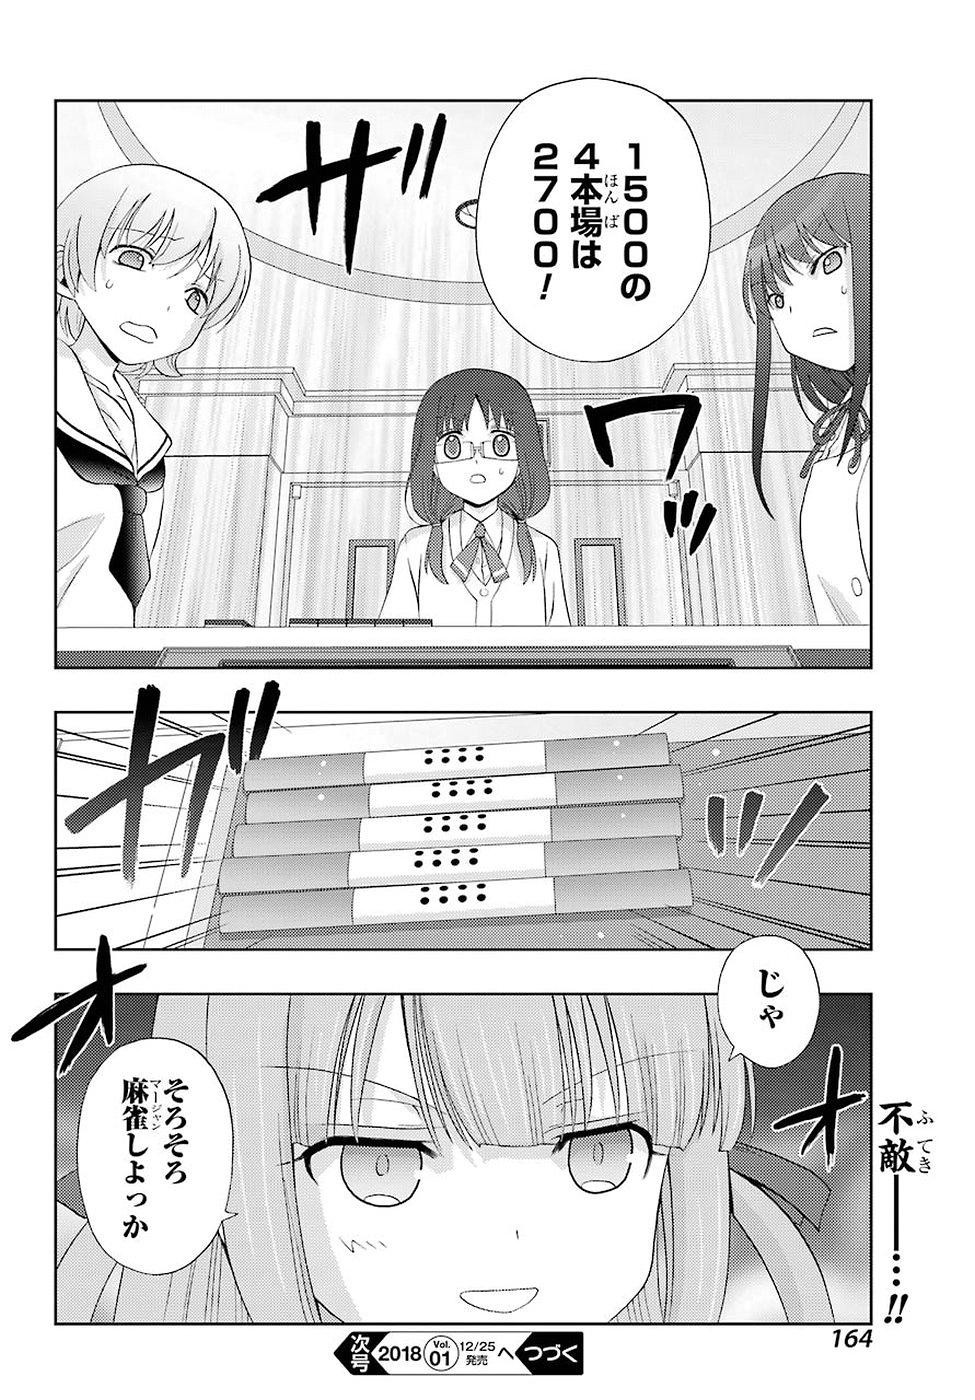 Shinohayu - The Dawn of Age Manga - Chapter 051 - Page 26